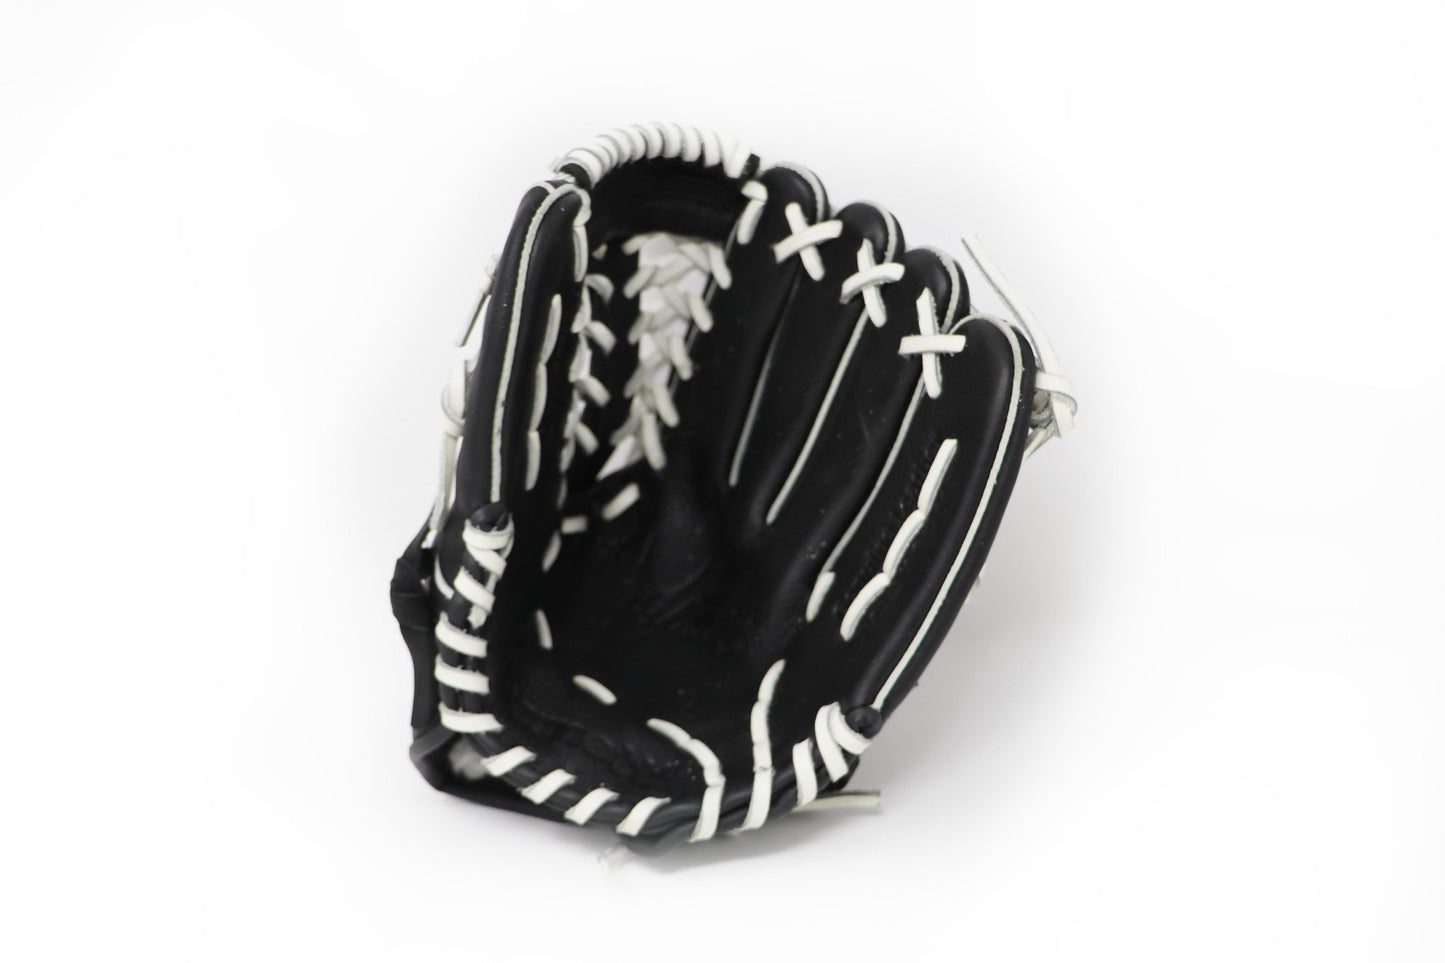 GL-115  Competition infield baseball Glove 11.5, black